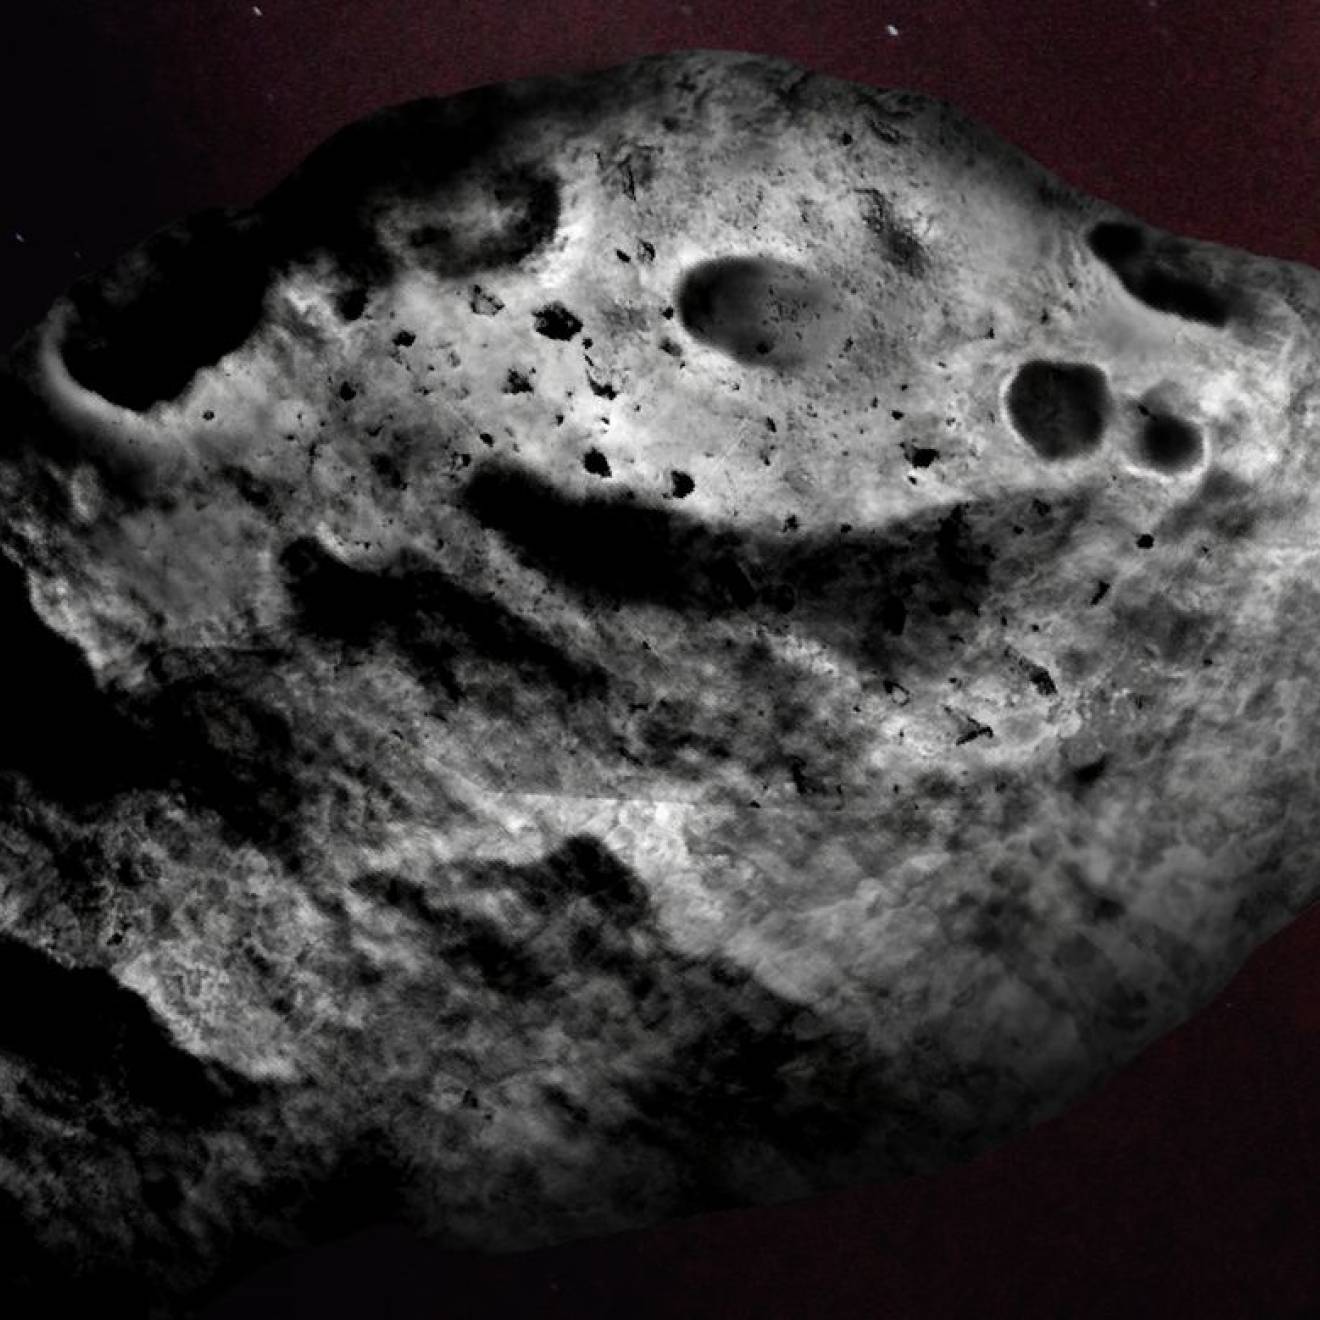 Black and white image of Comet C/2014 UN271